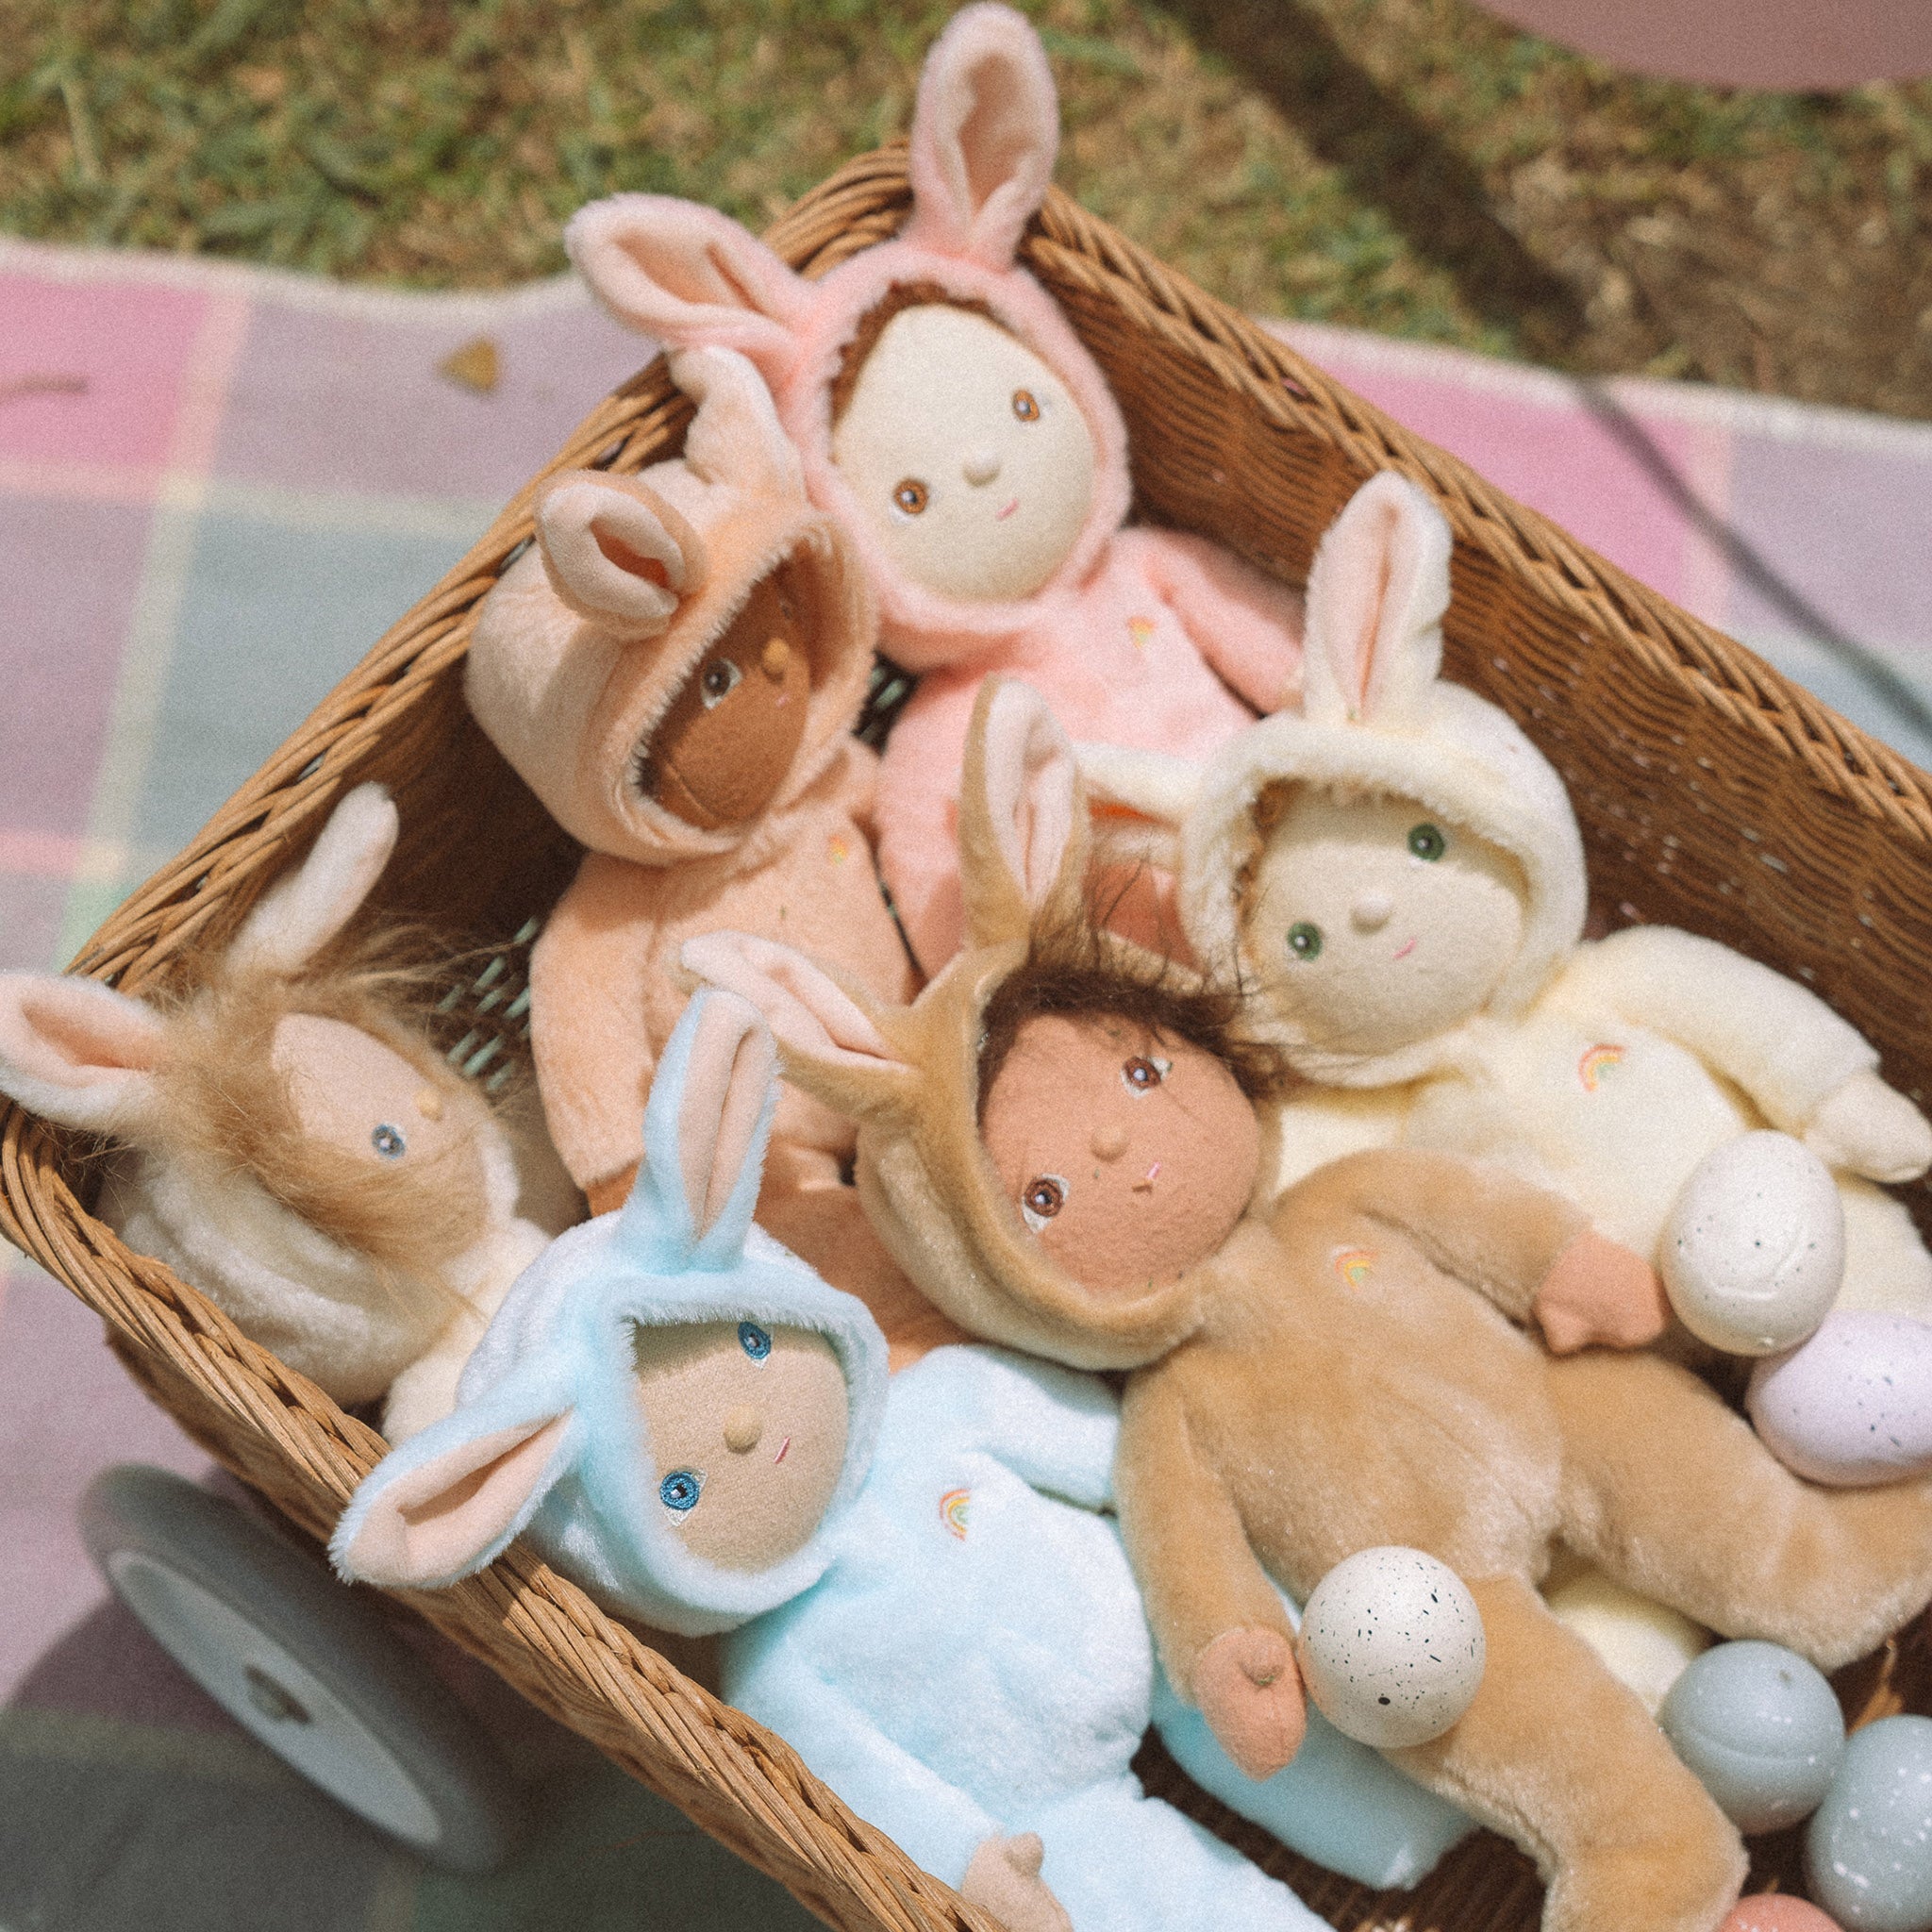 Olli Ella Fluffle Family Dinky Dinkum Doll – Bella Bunny